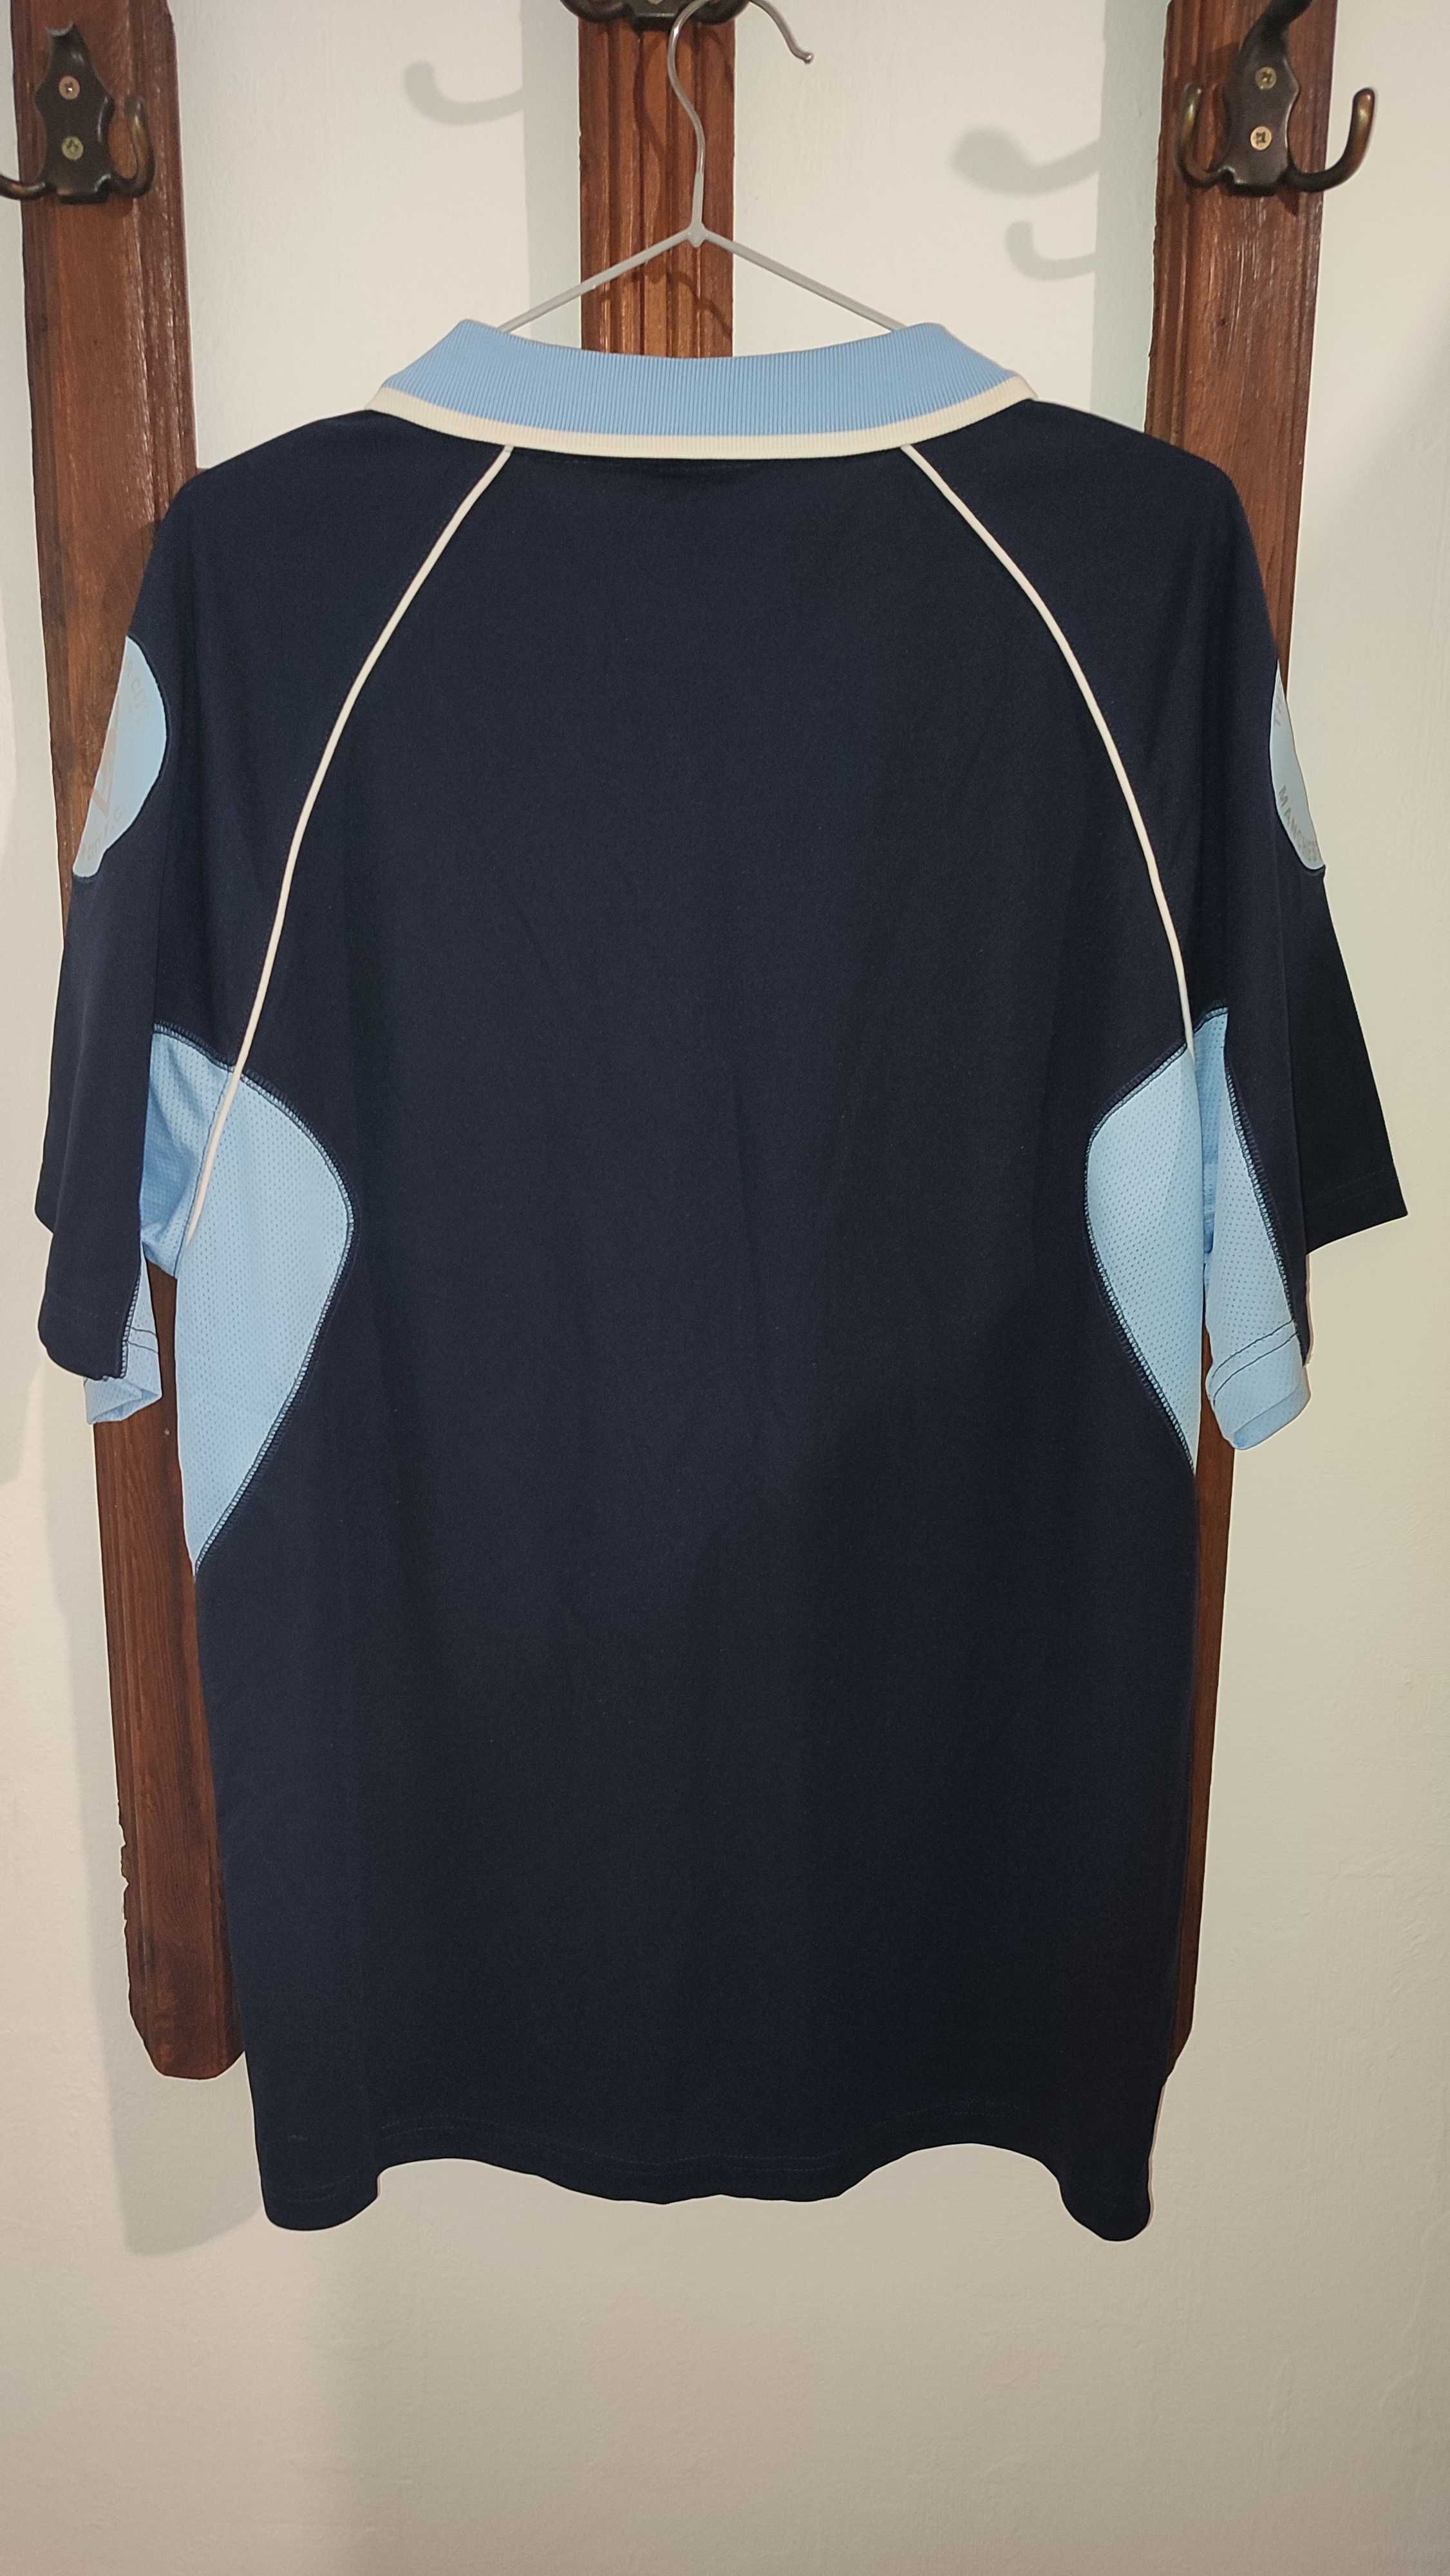 Тениска на Manchester City x Le Coq Sportif 02-03, Size XL